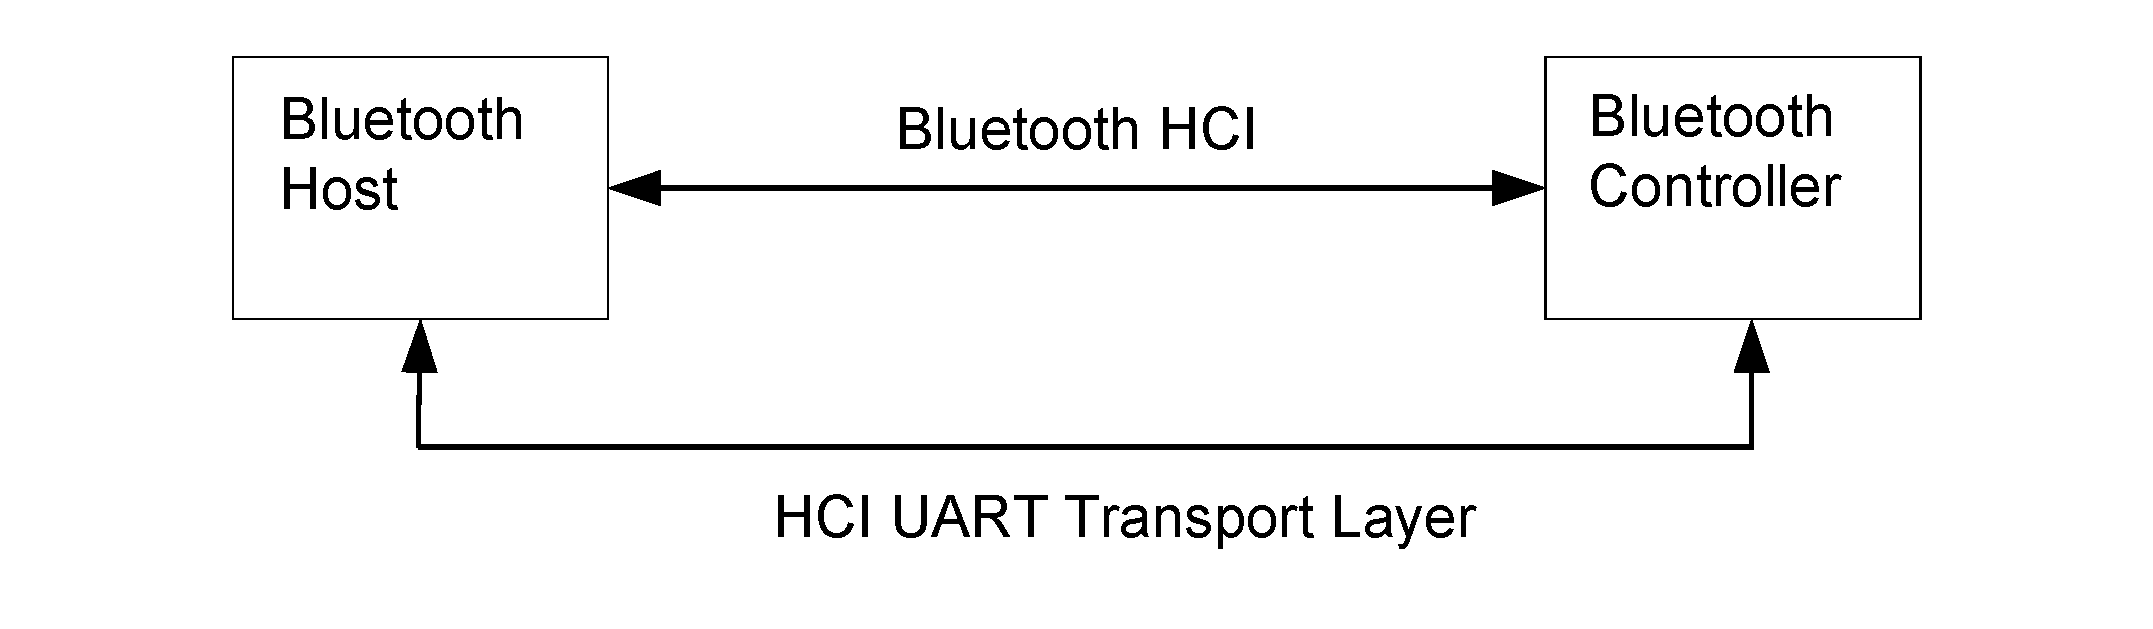 HCI UART Transport Layer